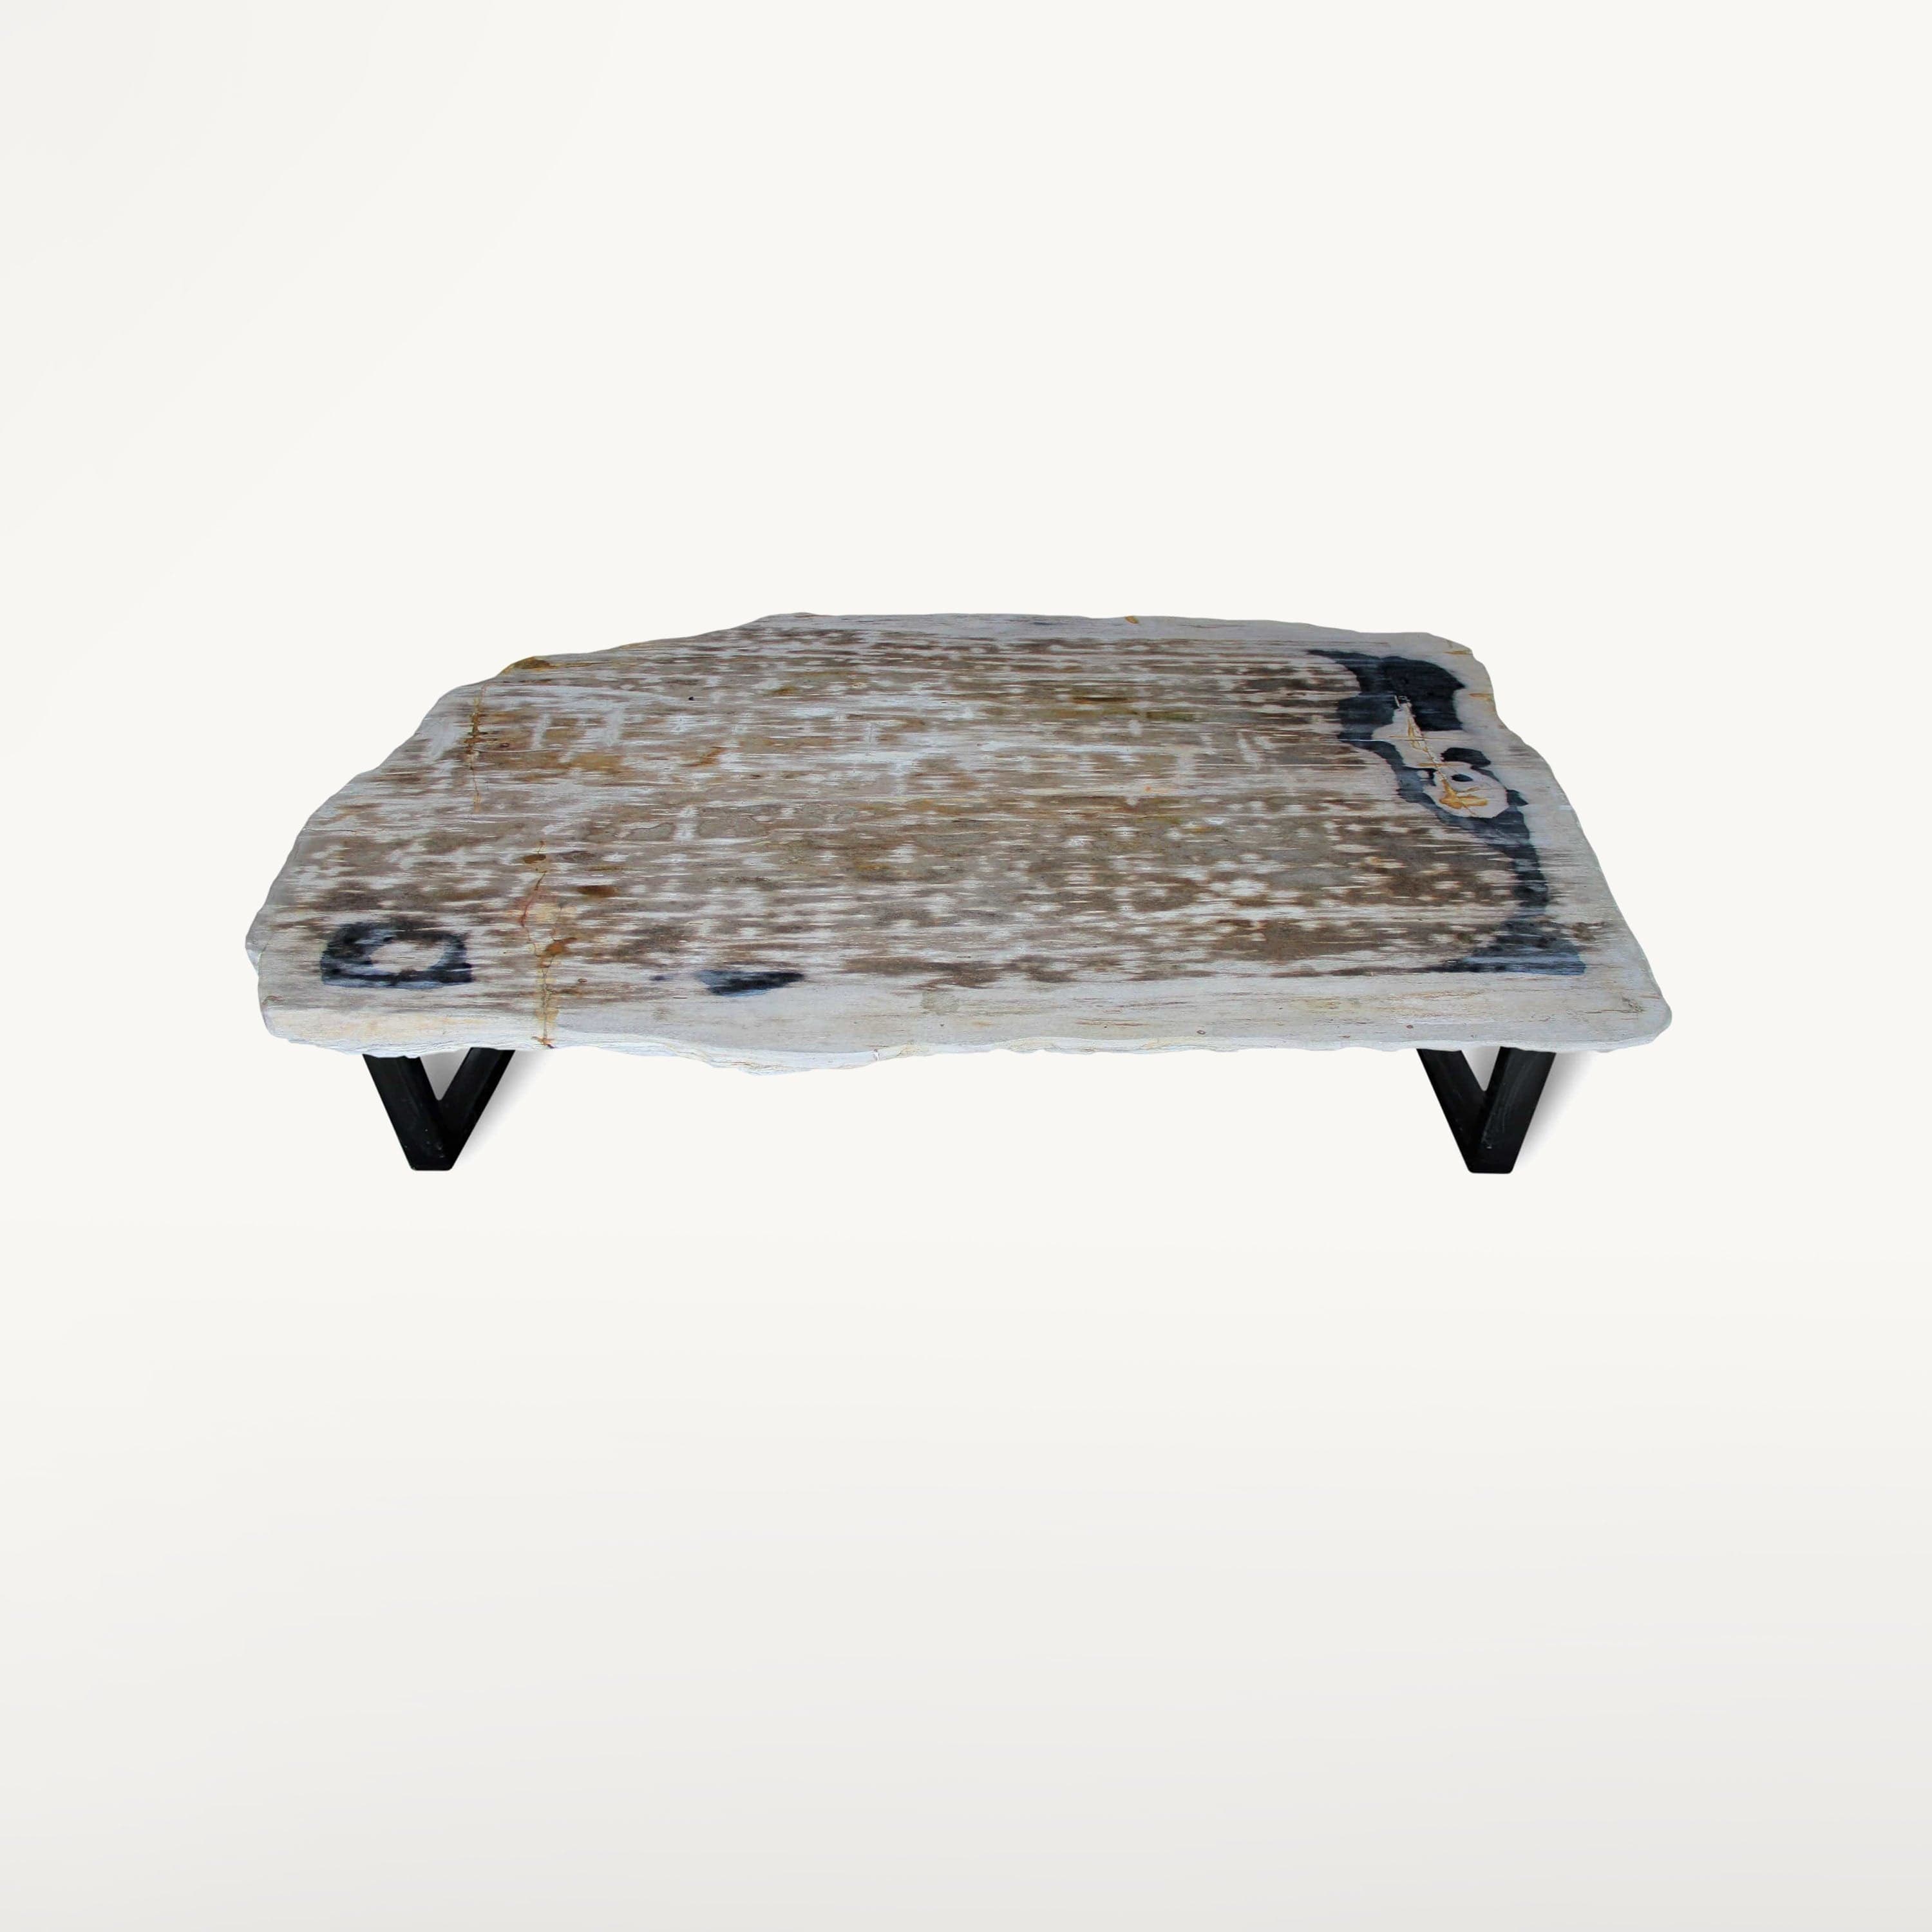 Kalifano Petrified Wood Polished Petrified Wood Table from Indonesia - 64" / 507 lbs PWR18400.001